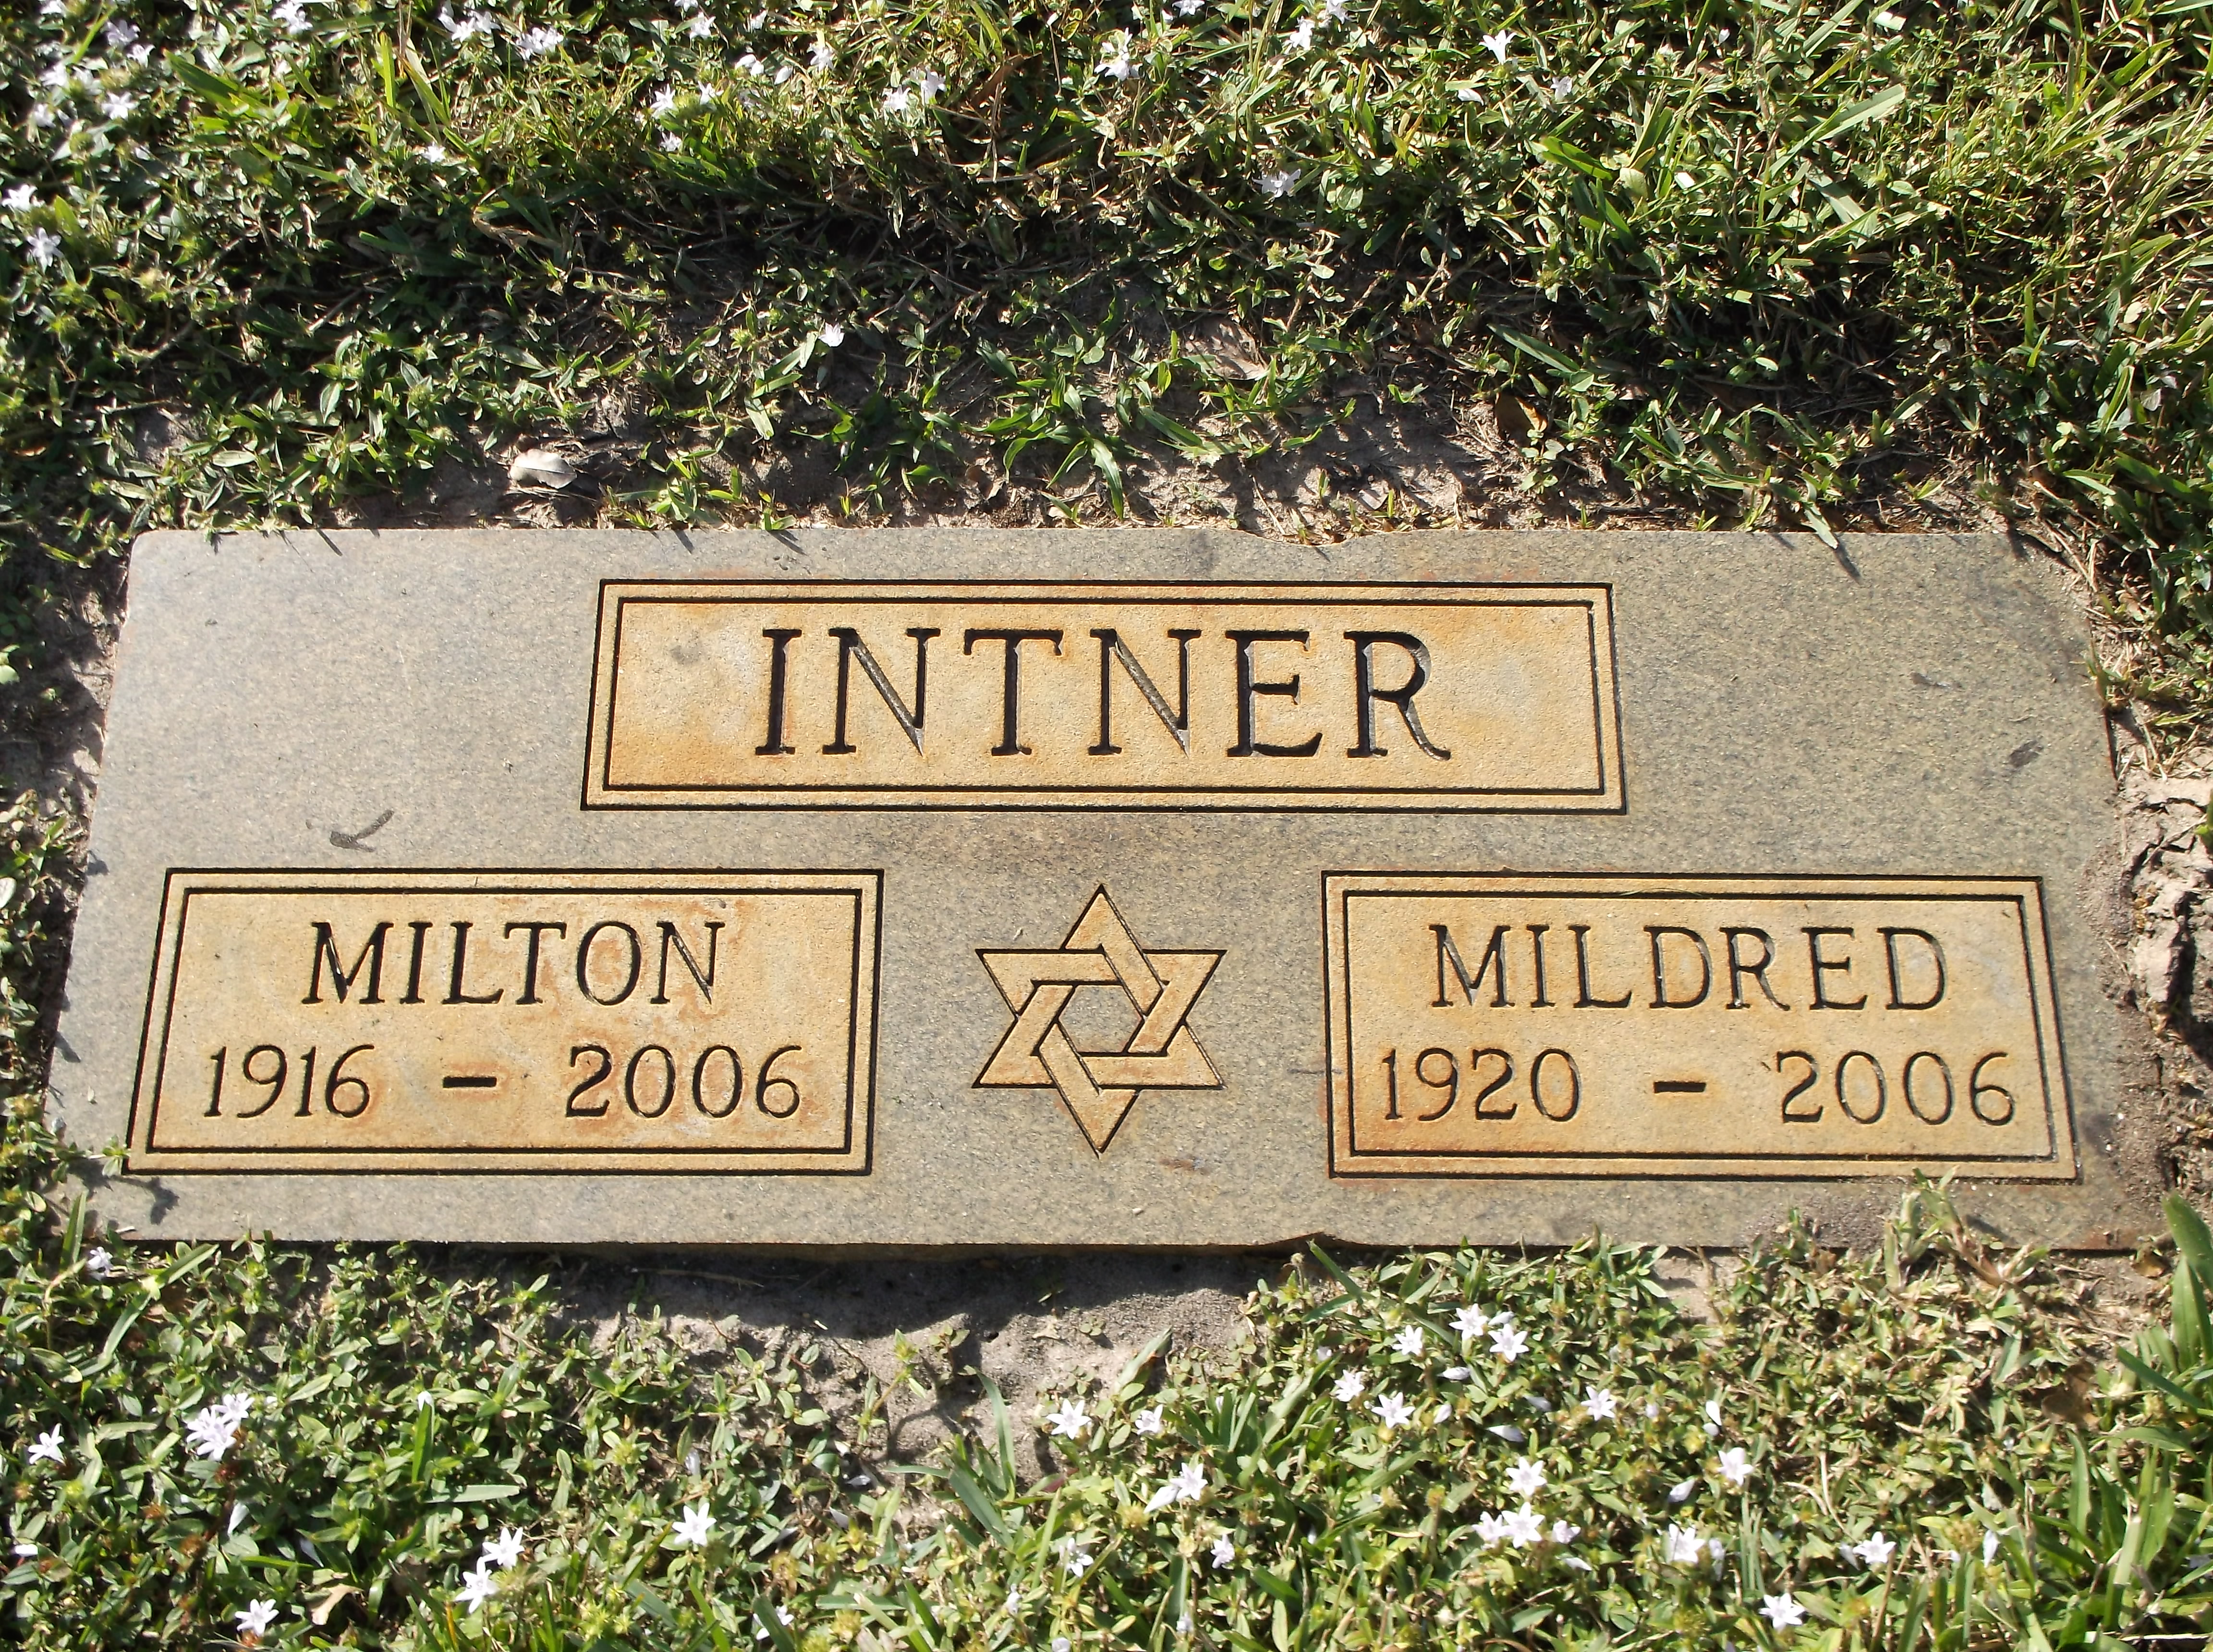 Milton Intner